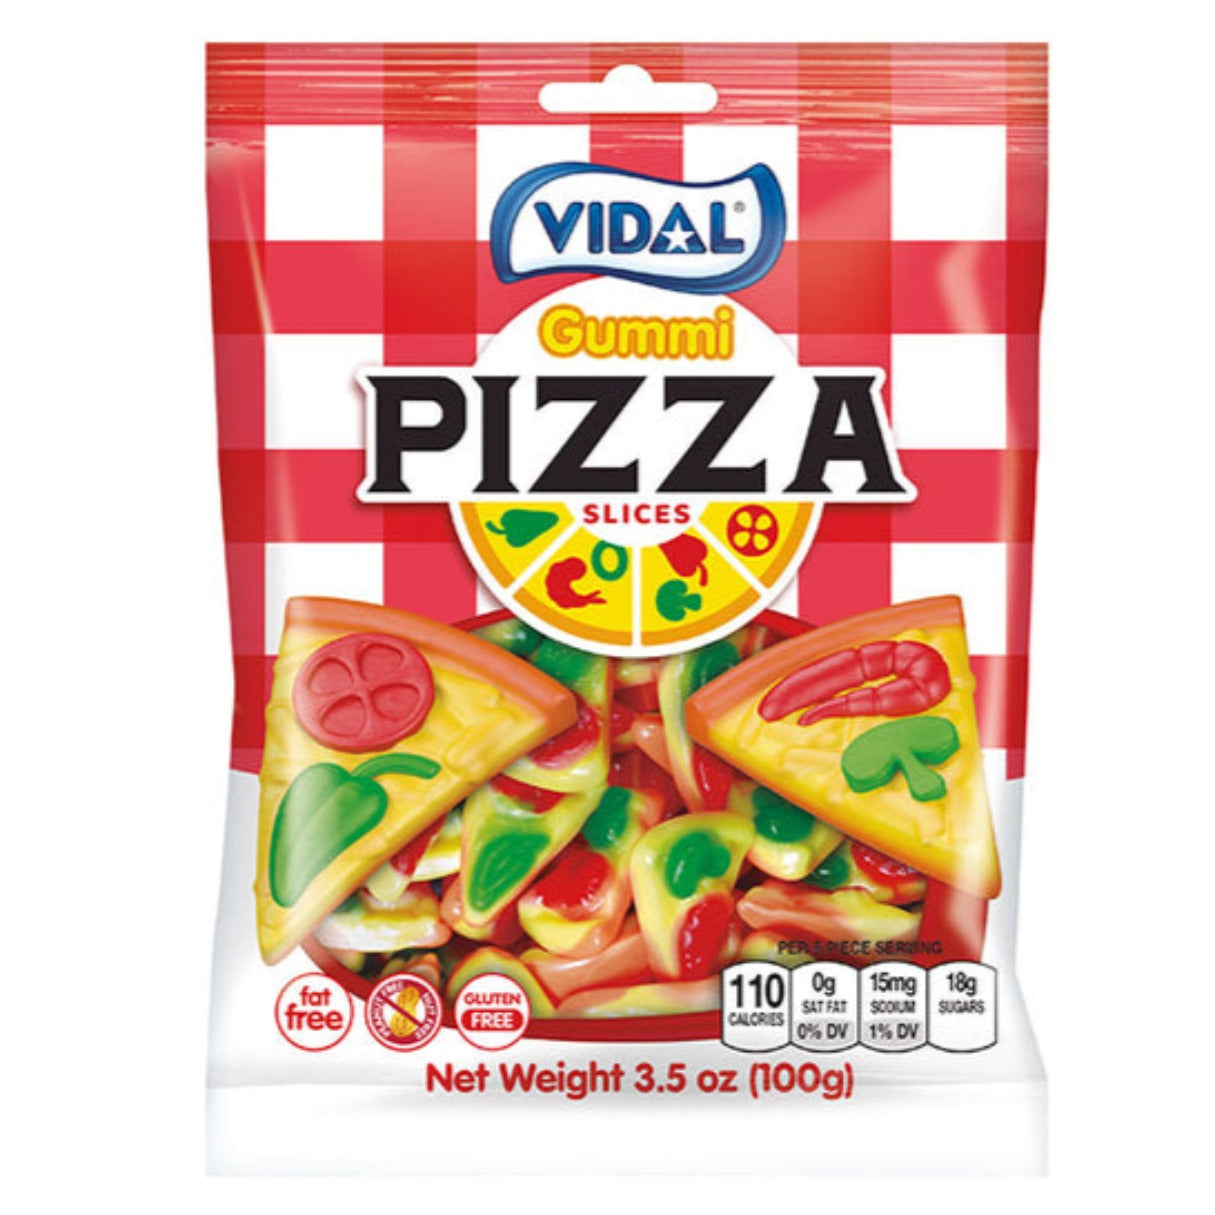 Vidal Gummi Pizza Slices Bag 3.5oz - 14ct